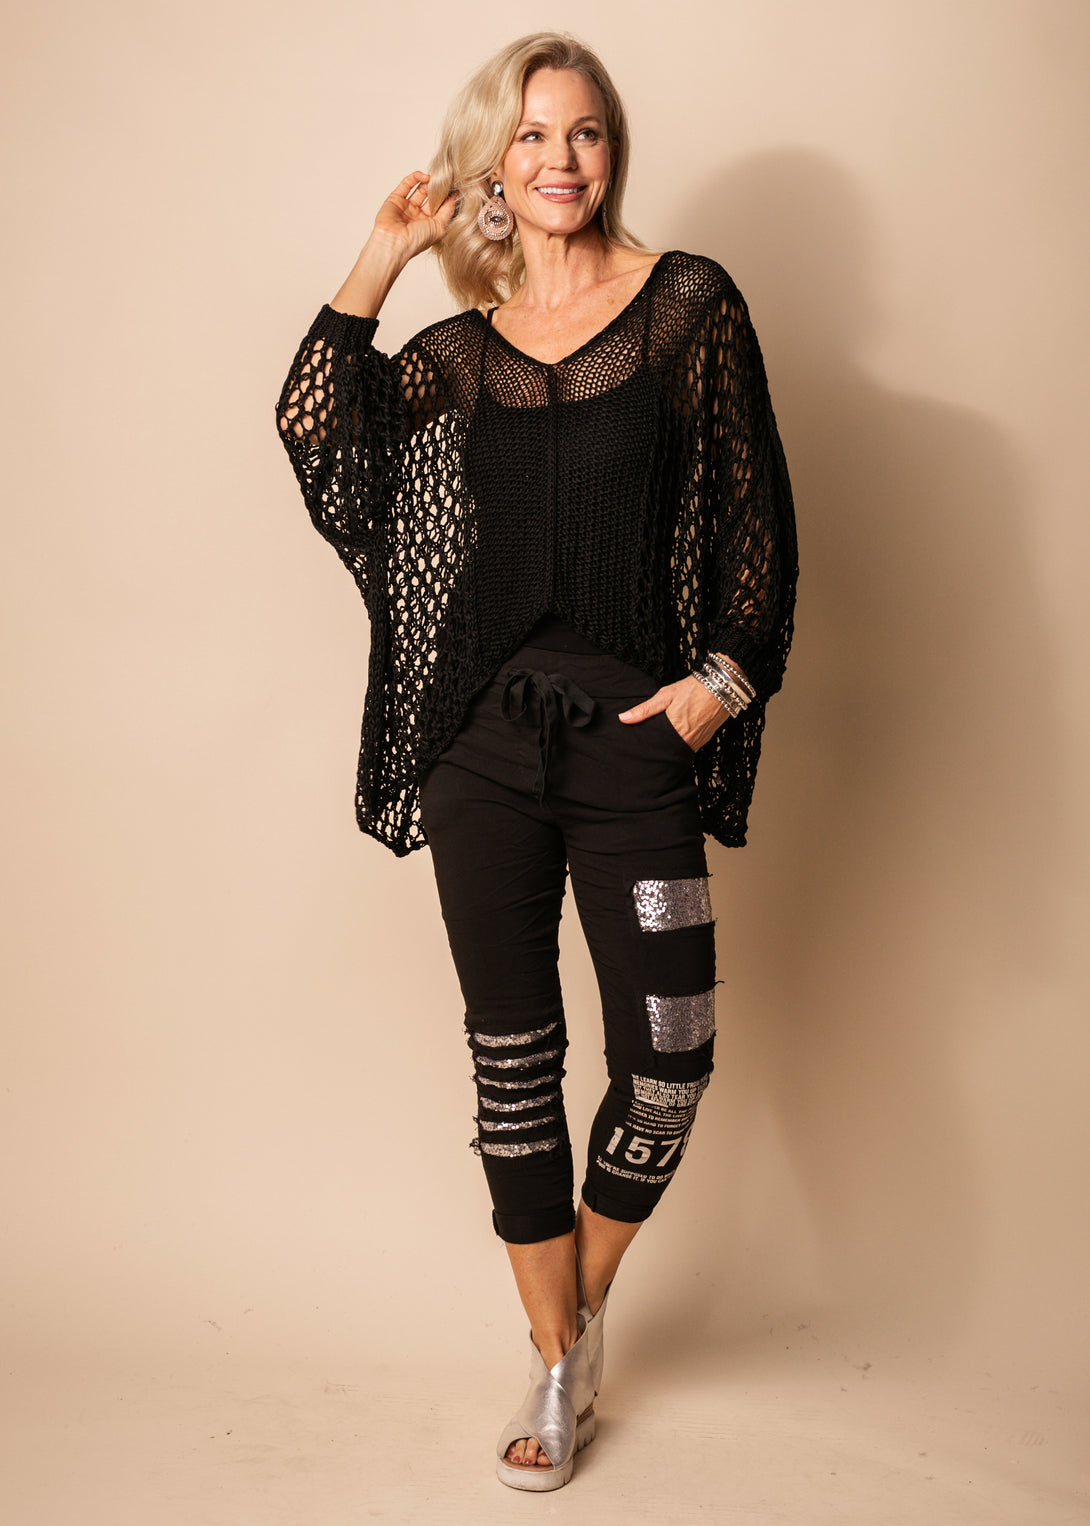 Ally Cotton Knit Top in Black - Imagine Fashion